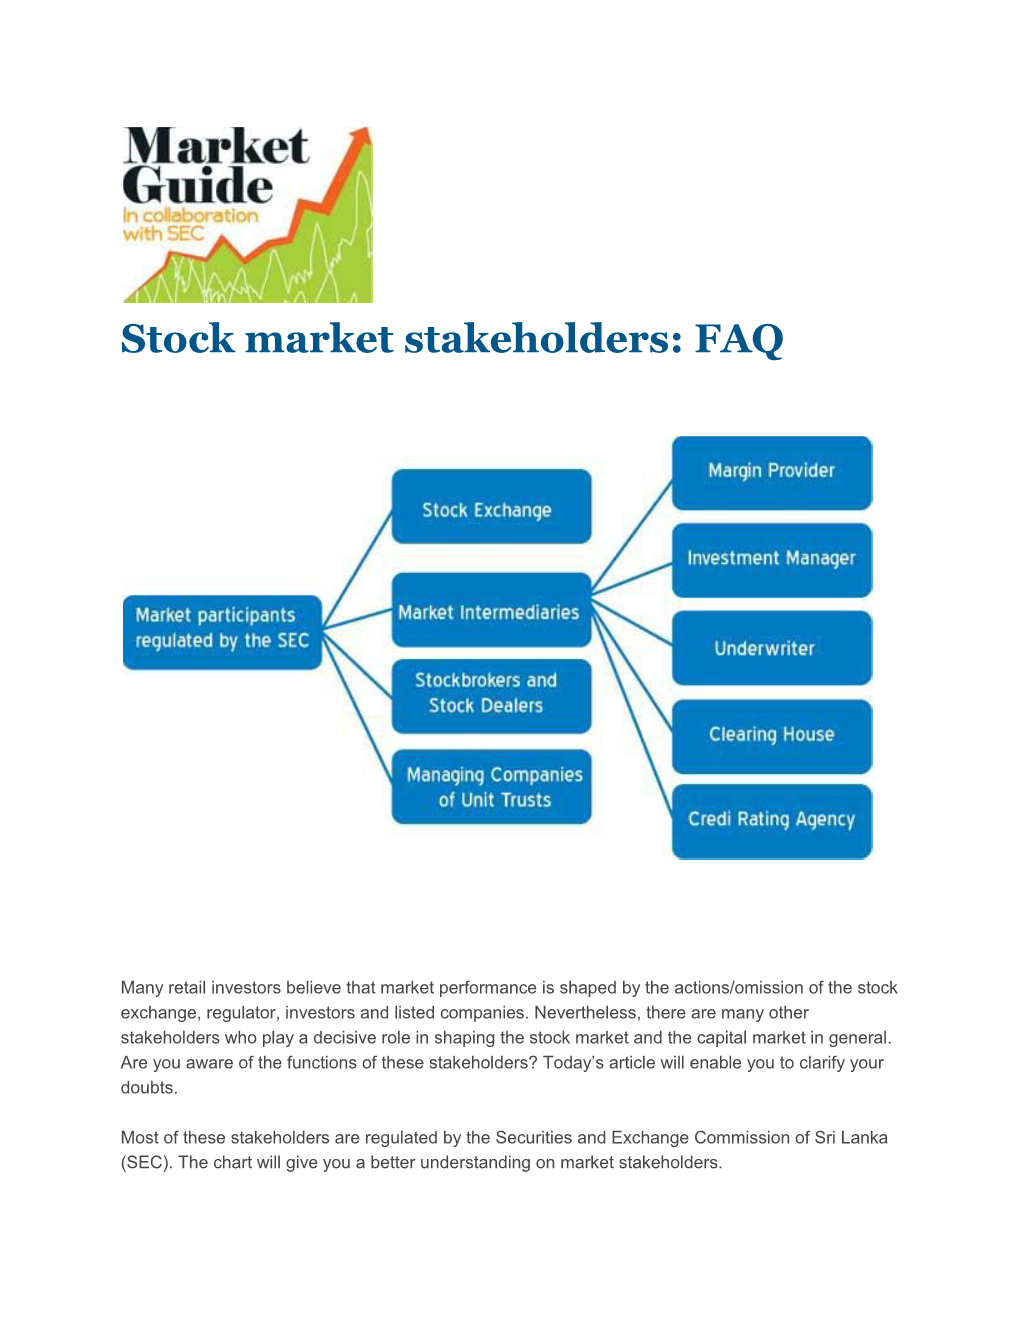 Stock Market Stakeholders: FAQ